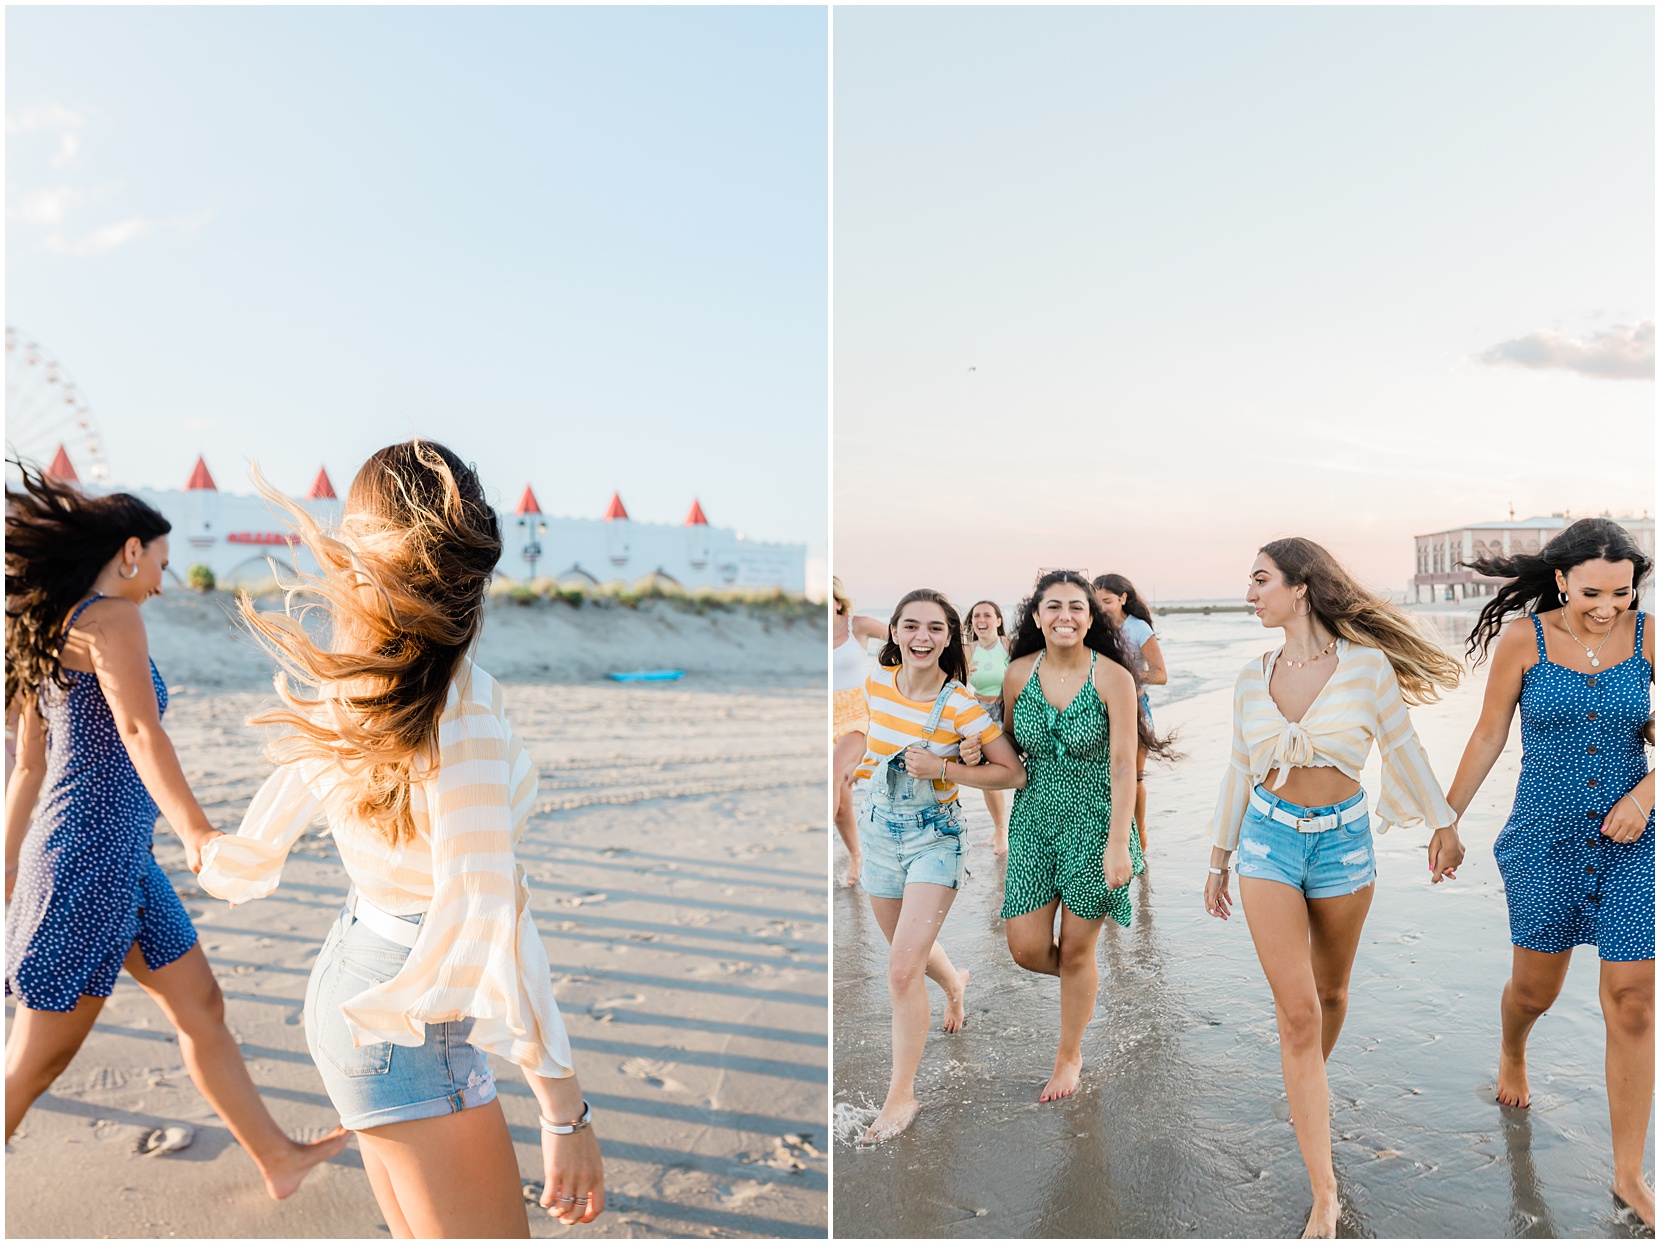 Teen girls skipping on the beach in Ocean City, NJ.